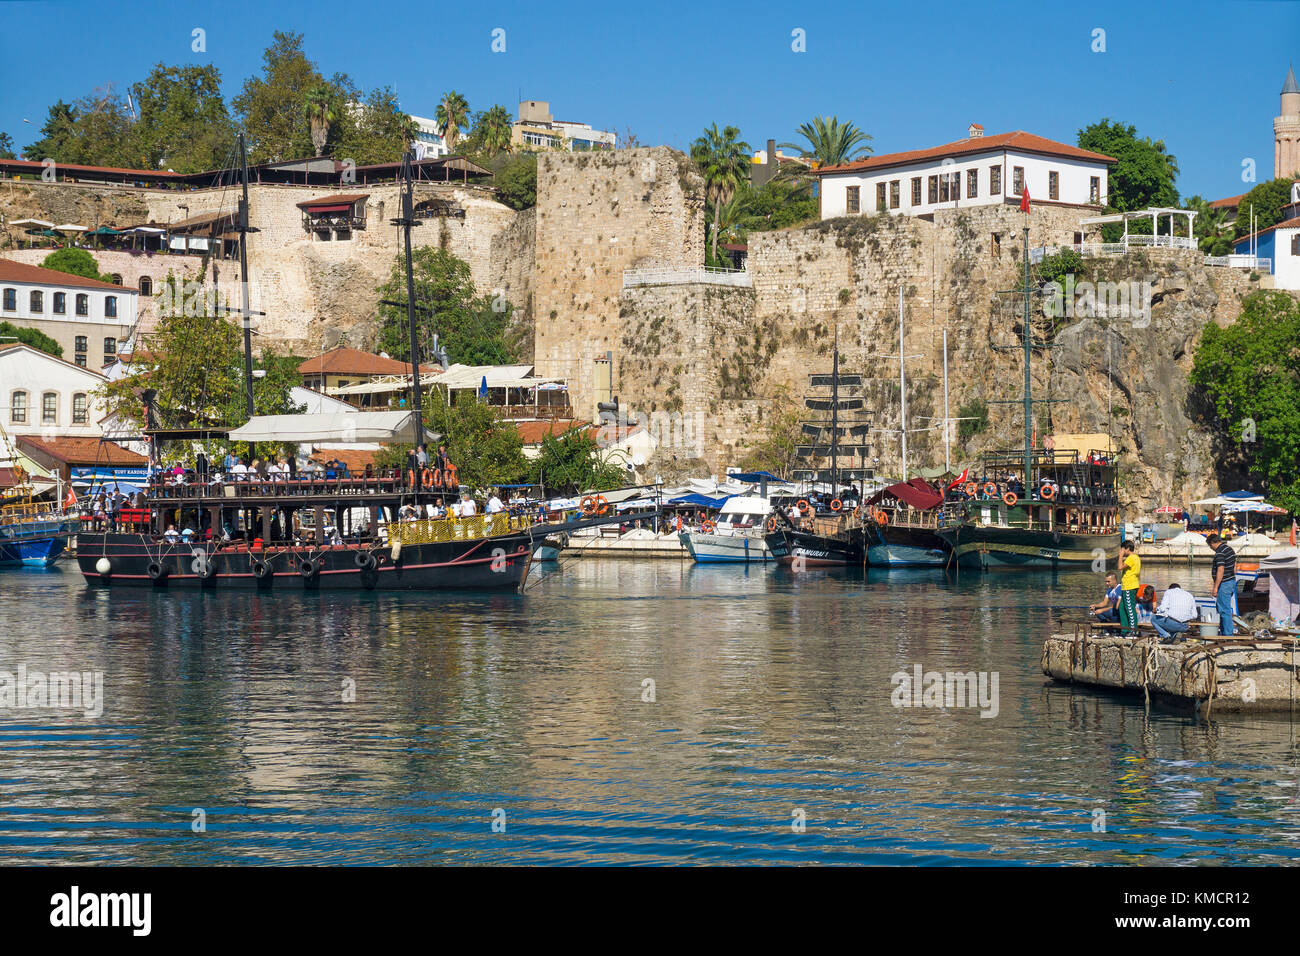 Harbour at the old town Kaleici, UNESCO world heritage site, Antalya, turkish riviera, Turkey Stock Photo